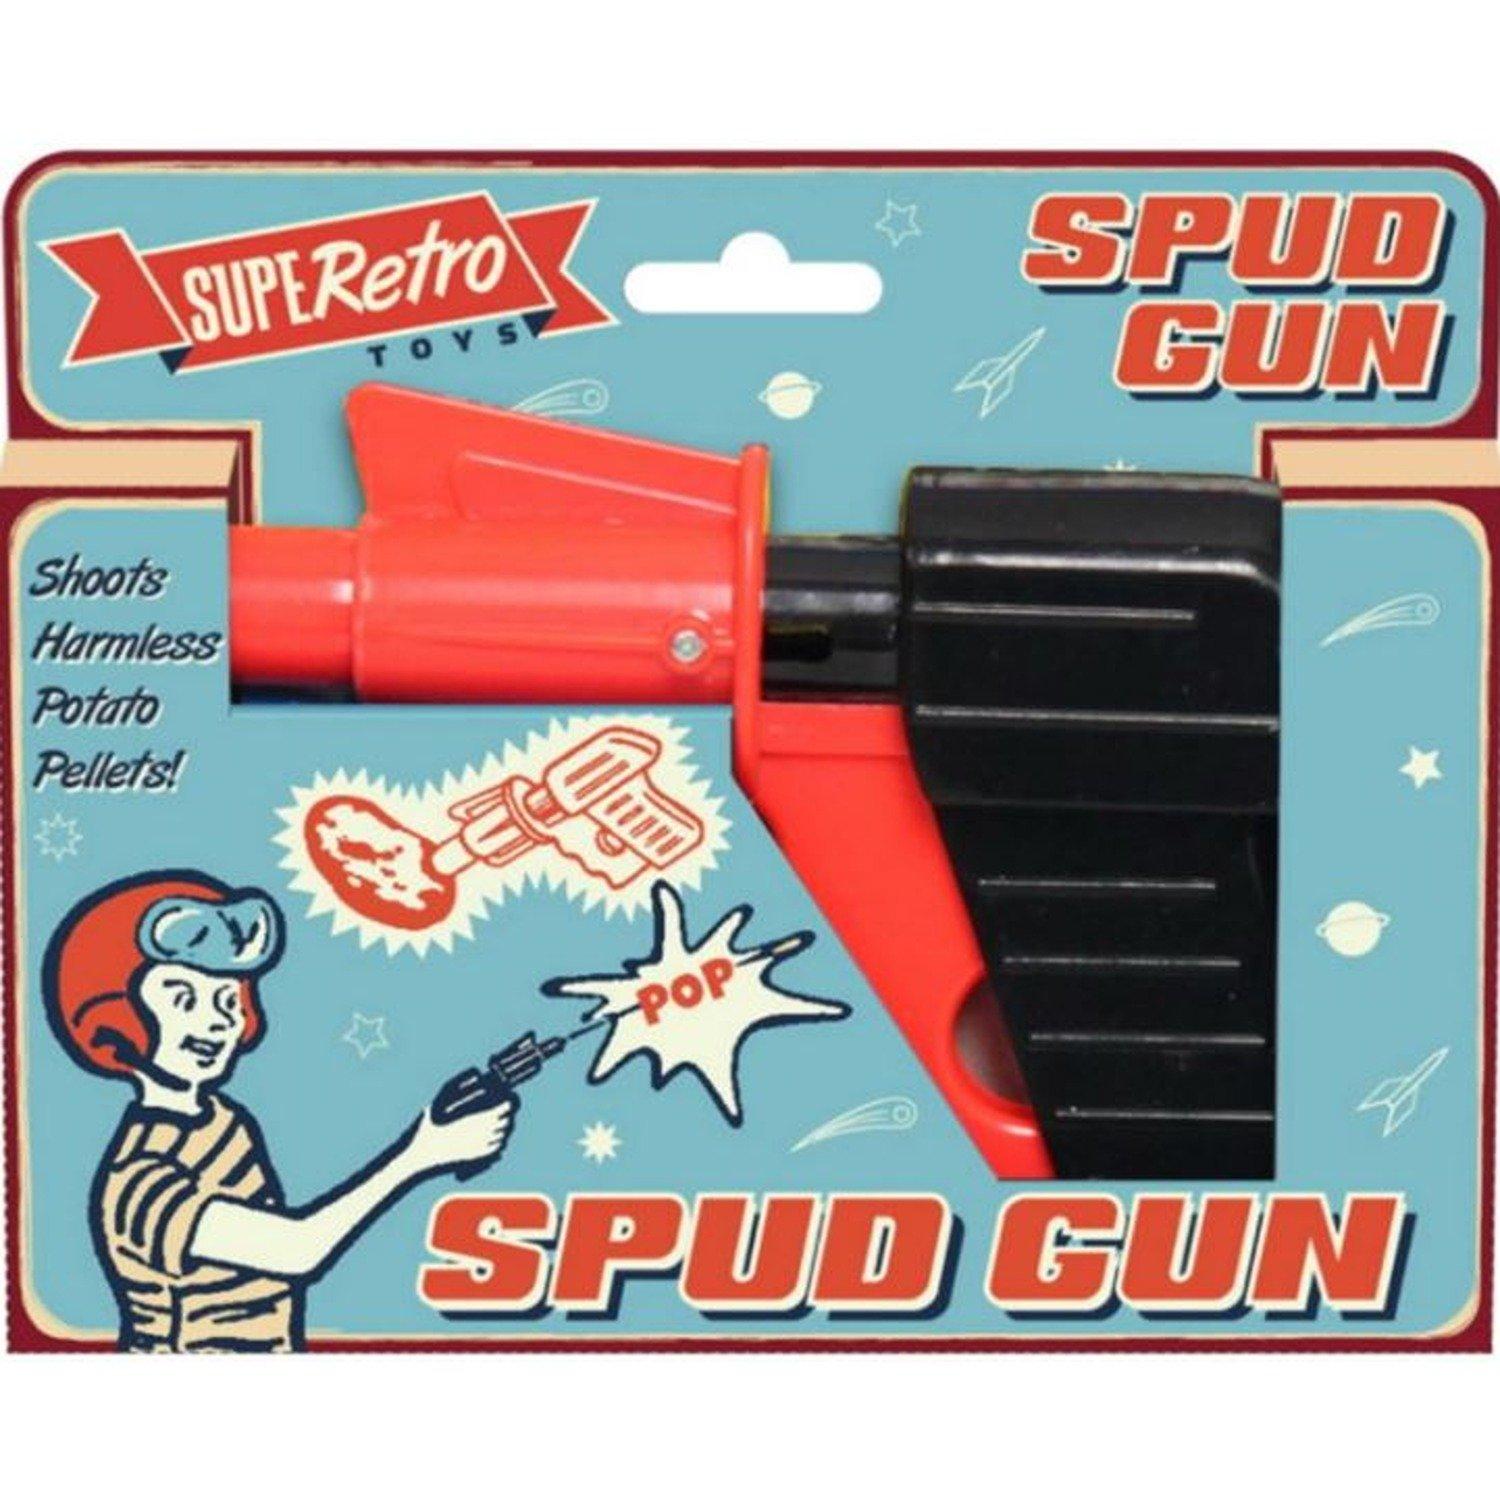 Spud Gun